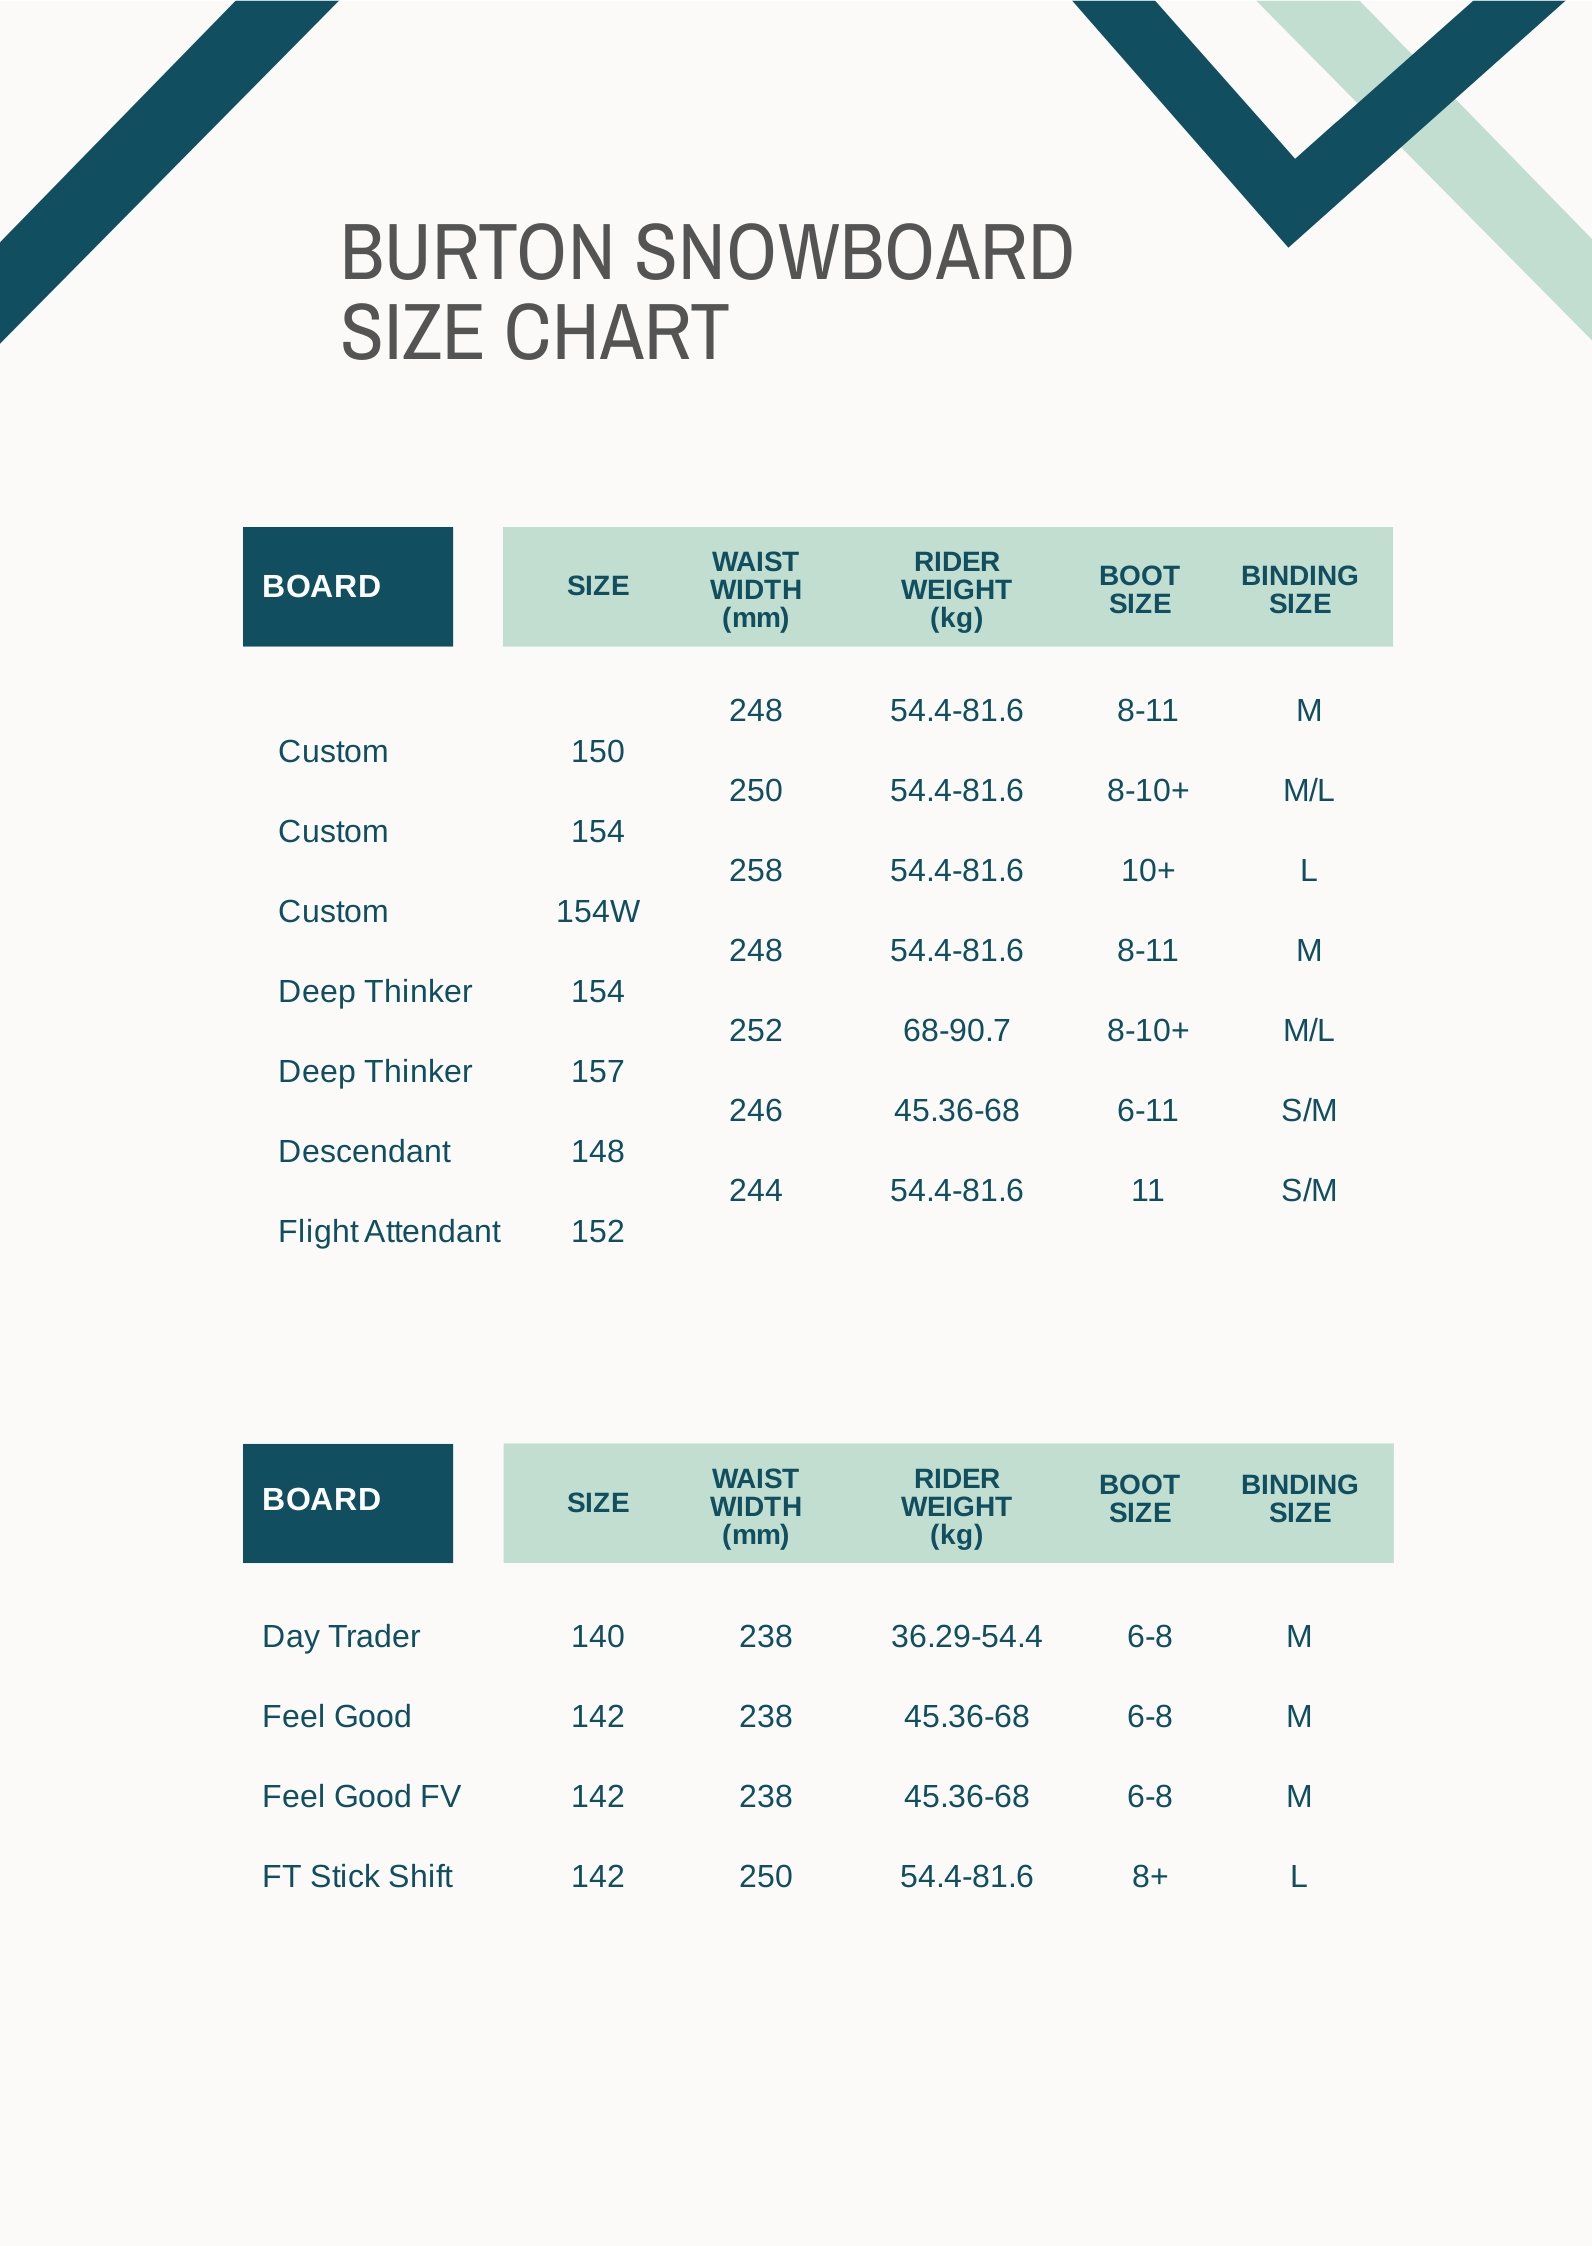 Free Burton Snowboard Size Chart in PDF